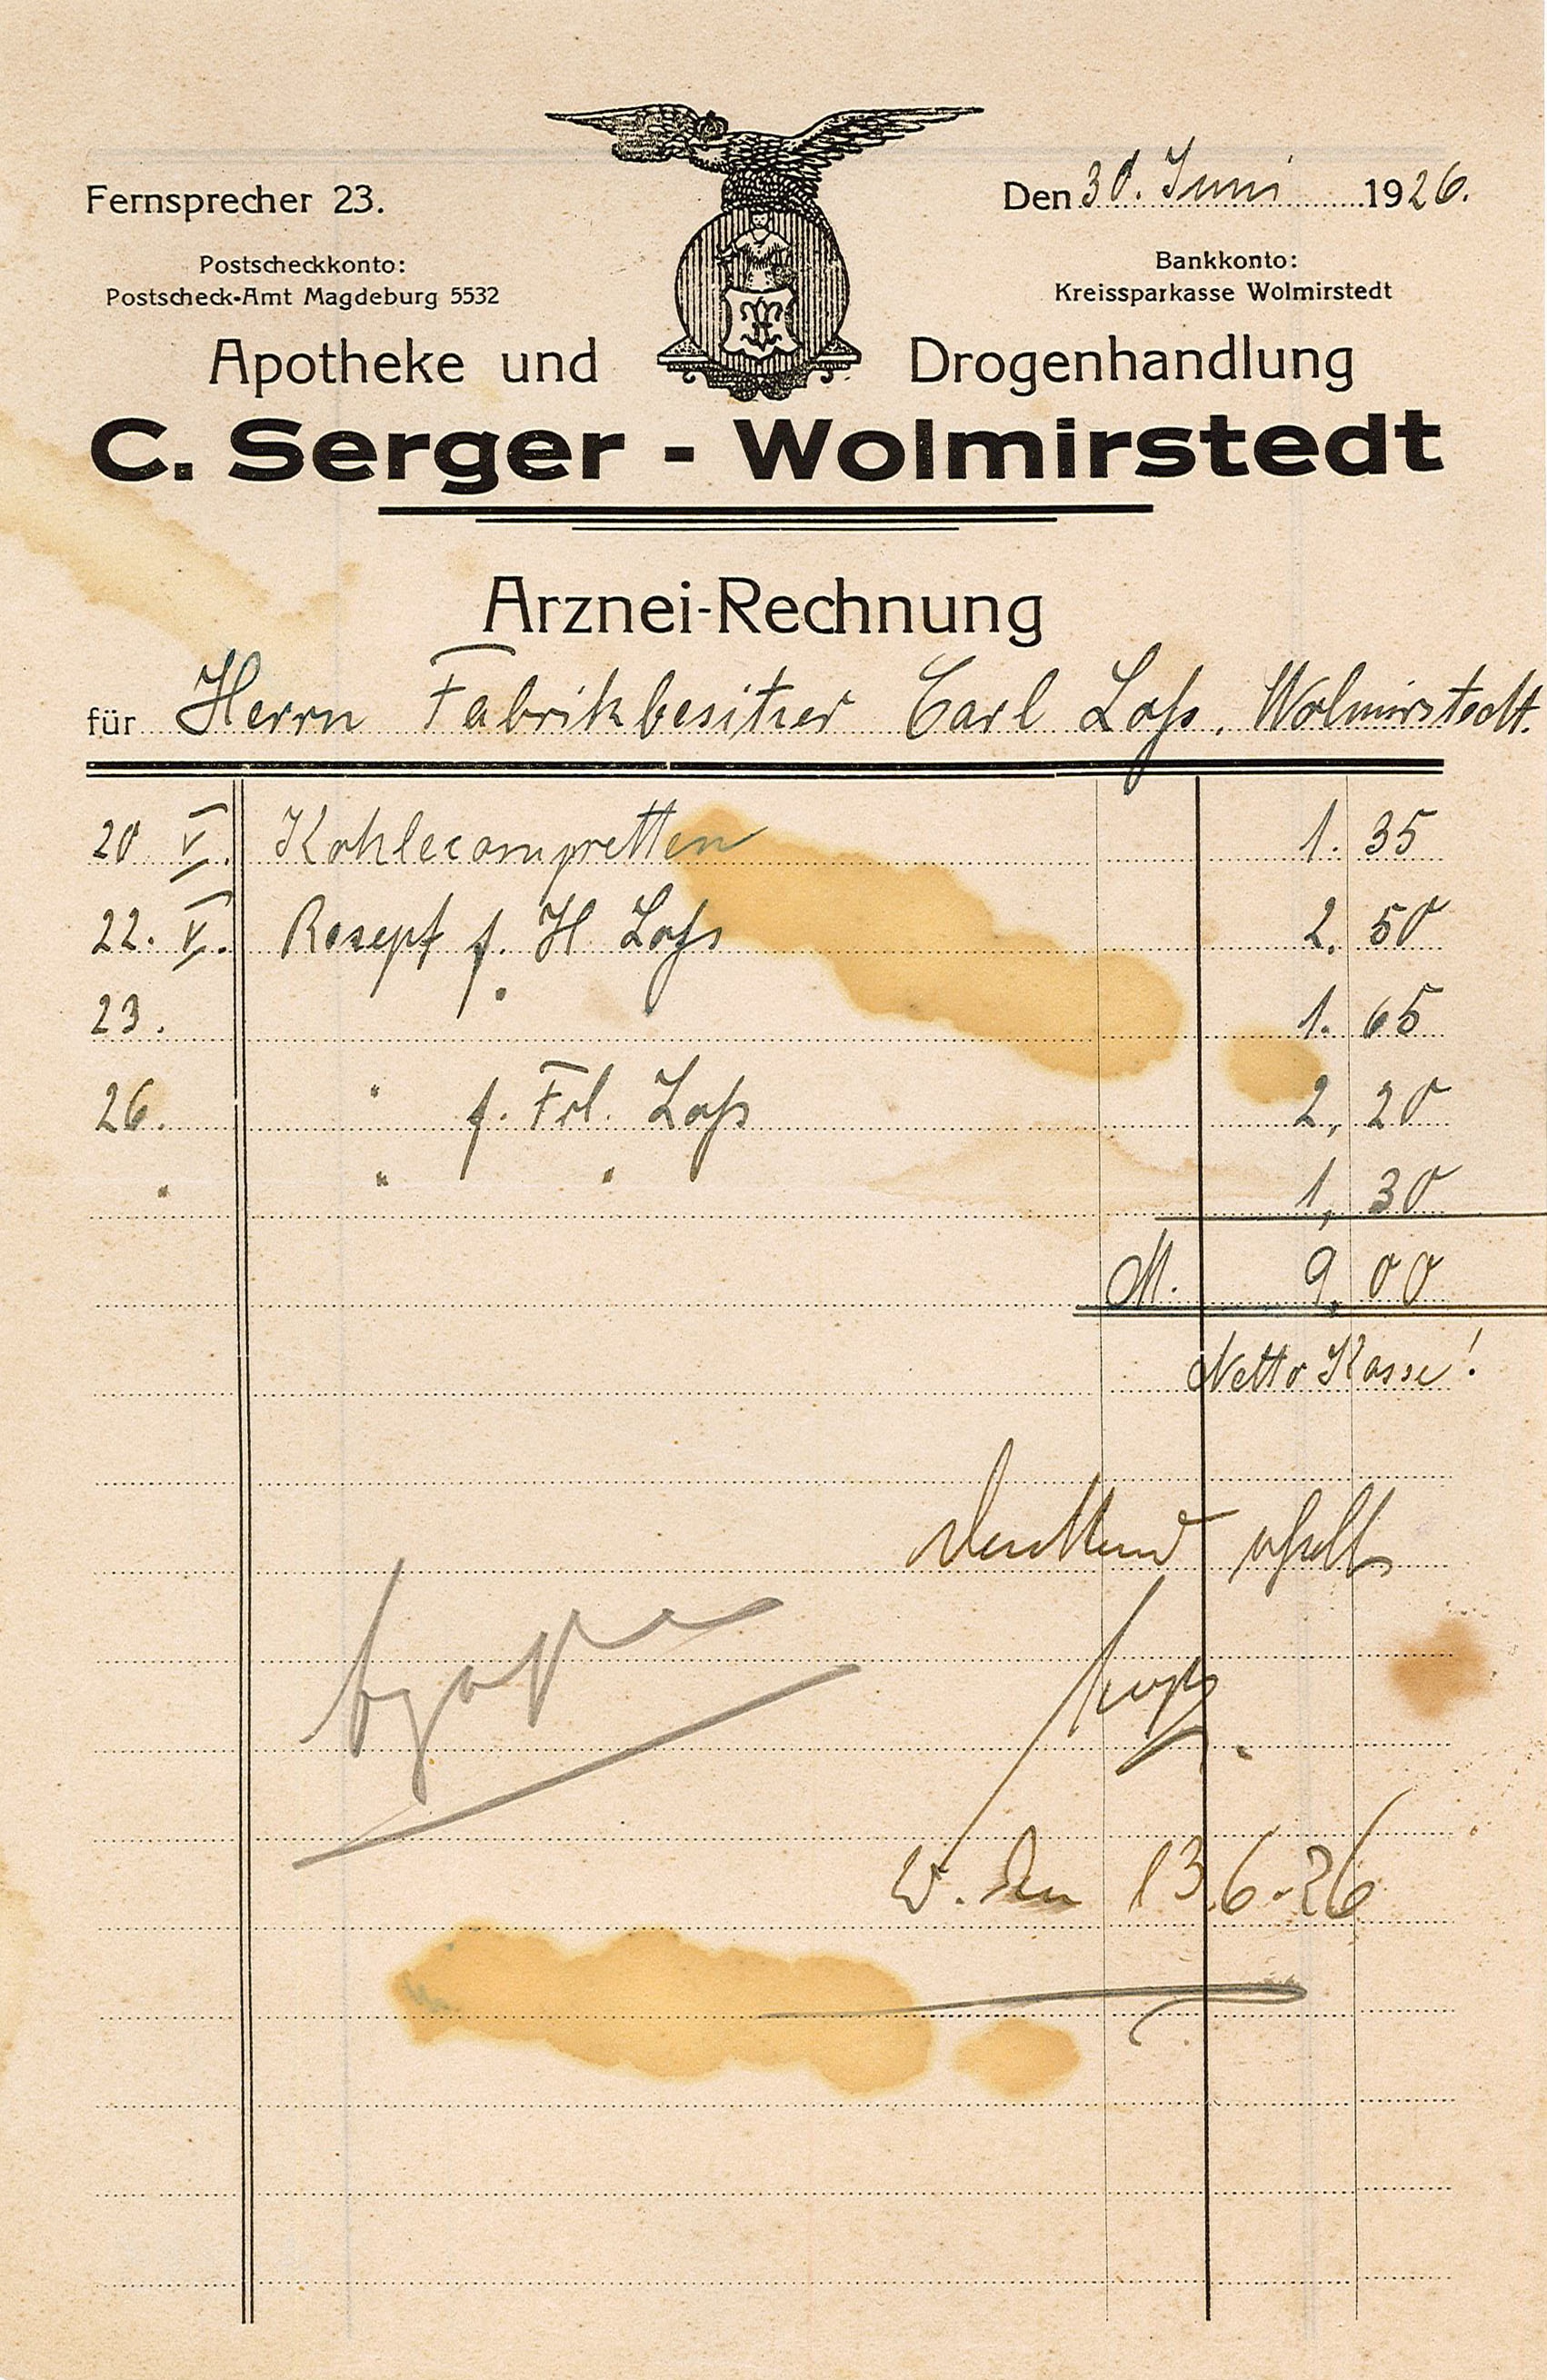 Rechnung von Apotheker C. Serger an Fabrikbesitzer Carl Loss, 30. Juni 1926 (Museum Wolmirstedt RR-F)